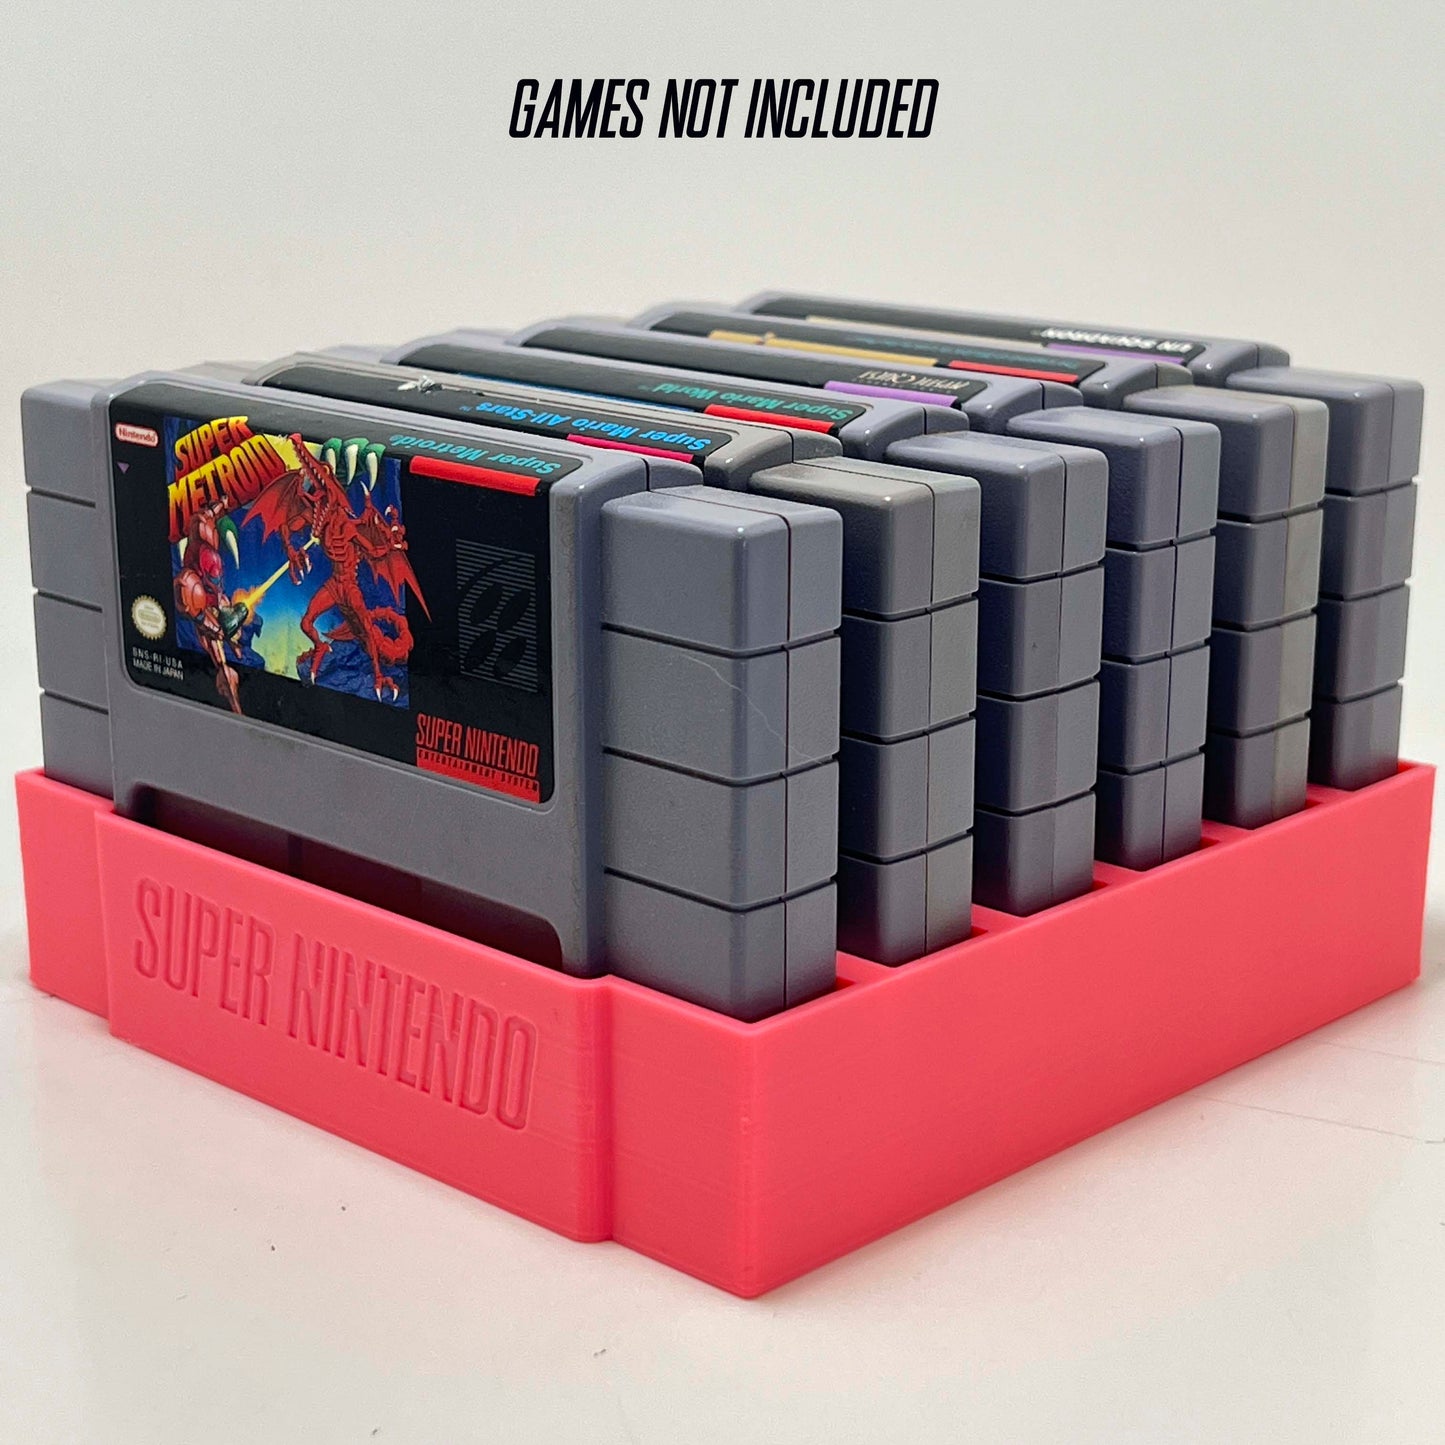 Super Nintendo Six Cartridge Storage Tray